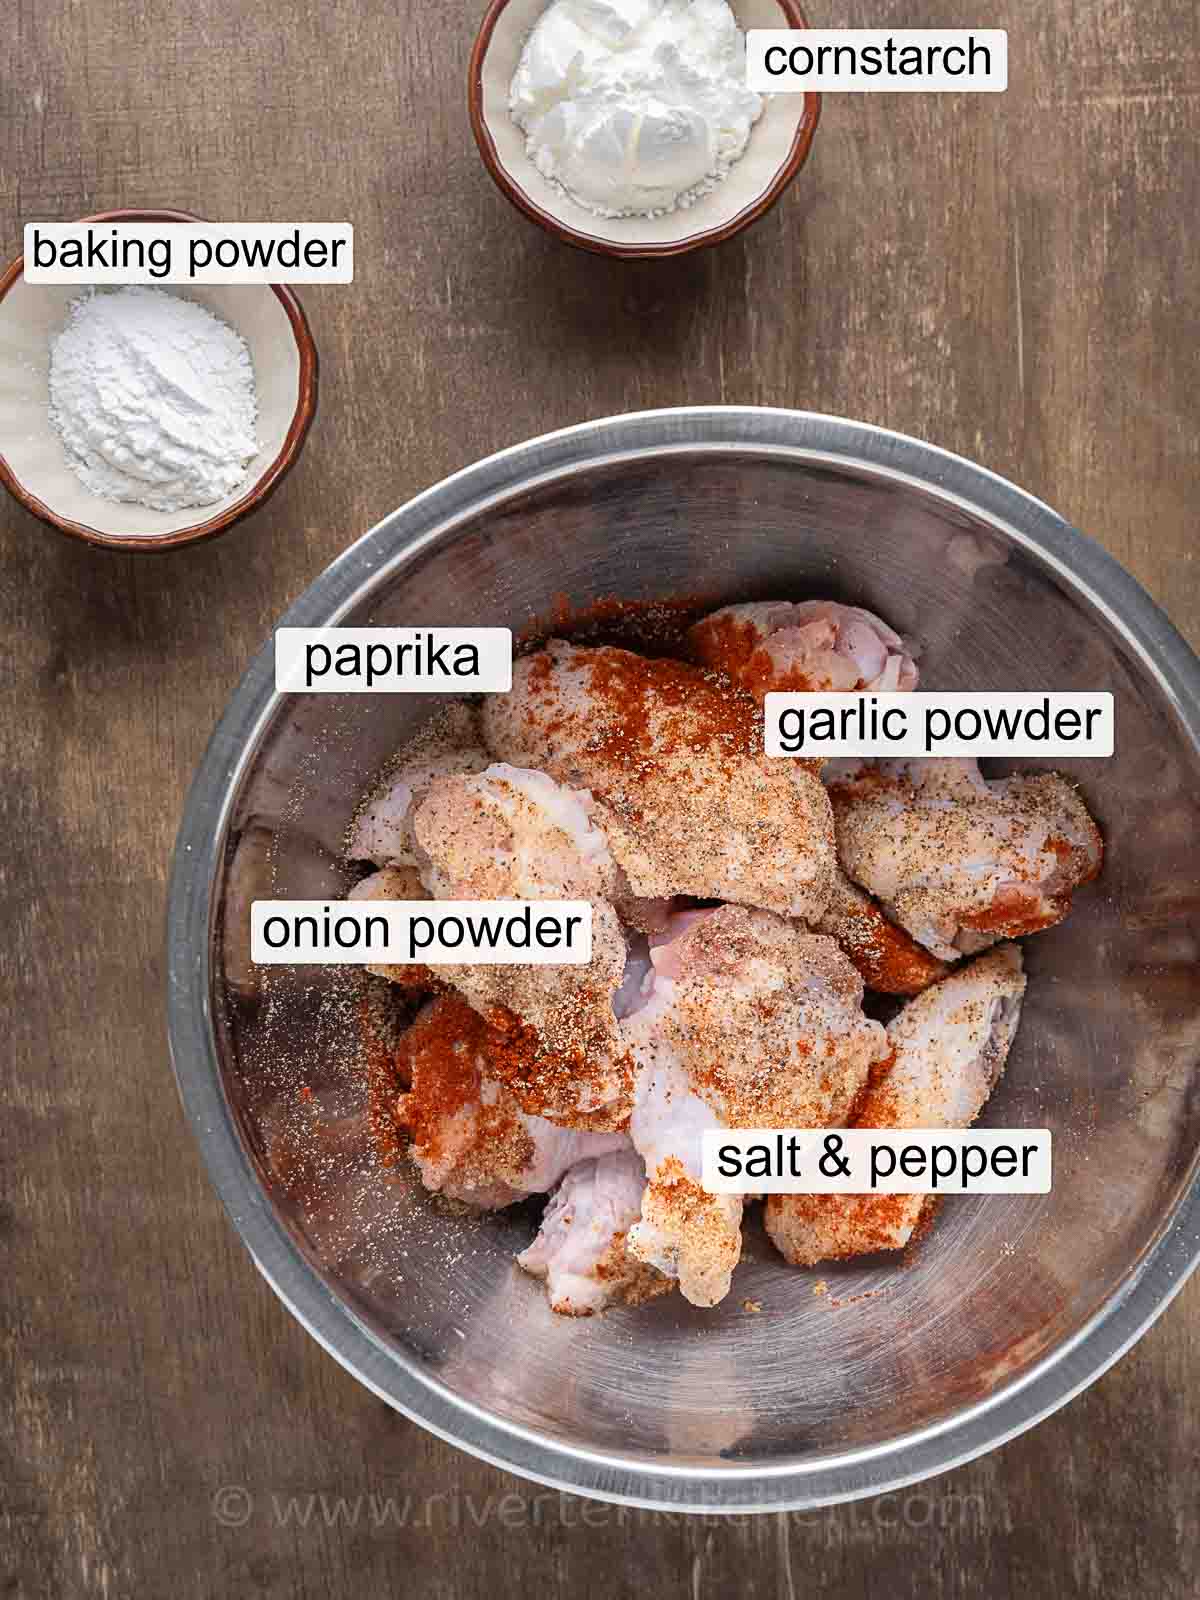 chicken wings, salt, pepper, paprika, baking powder, onion powder, and cornstarch.